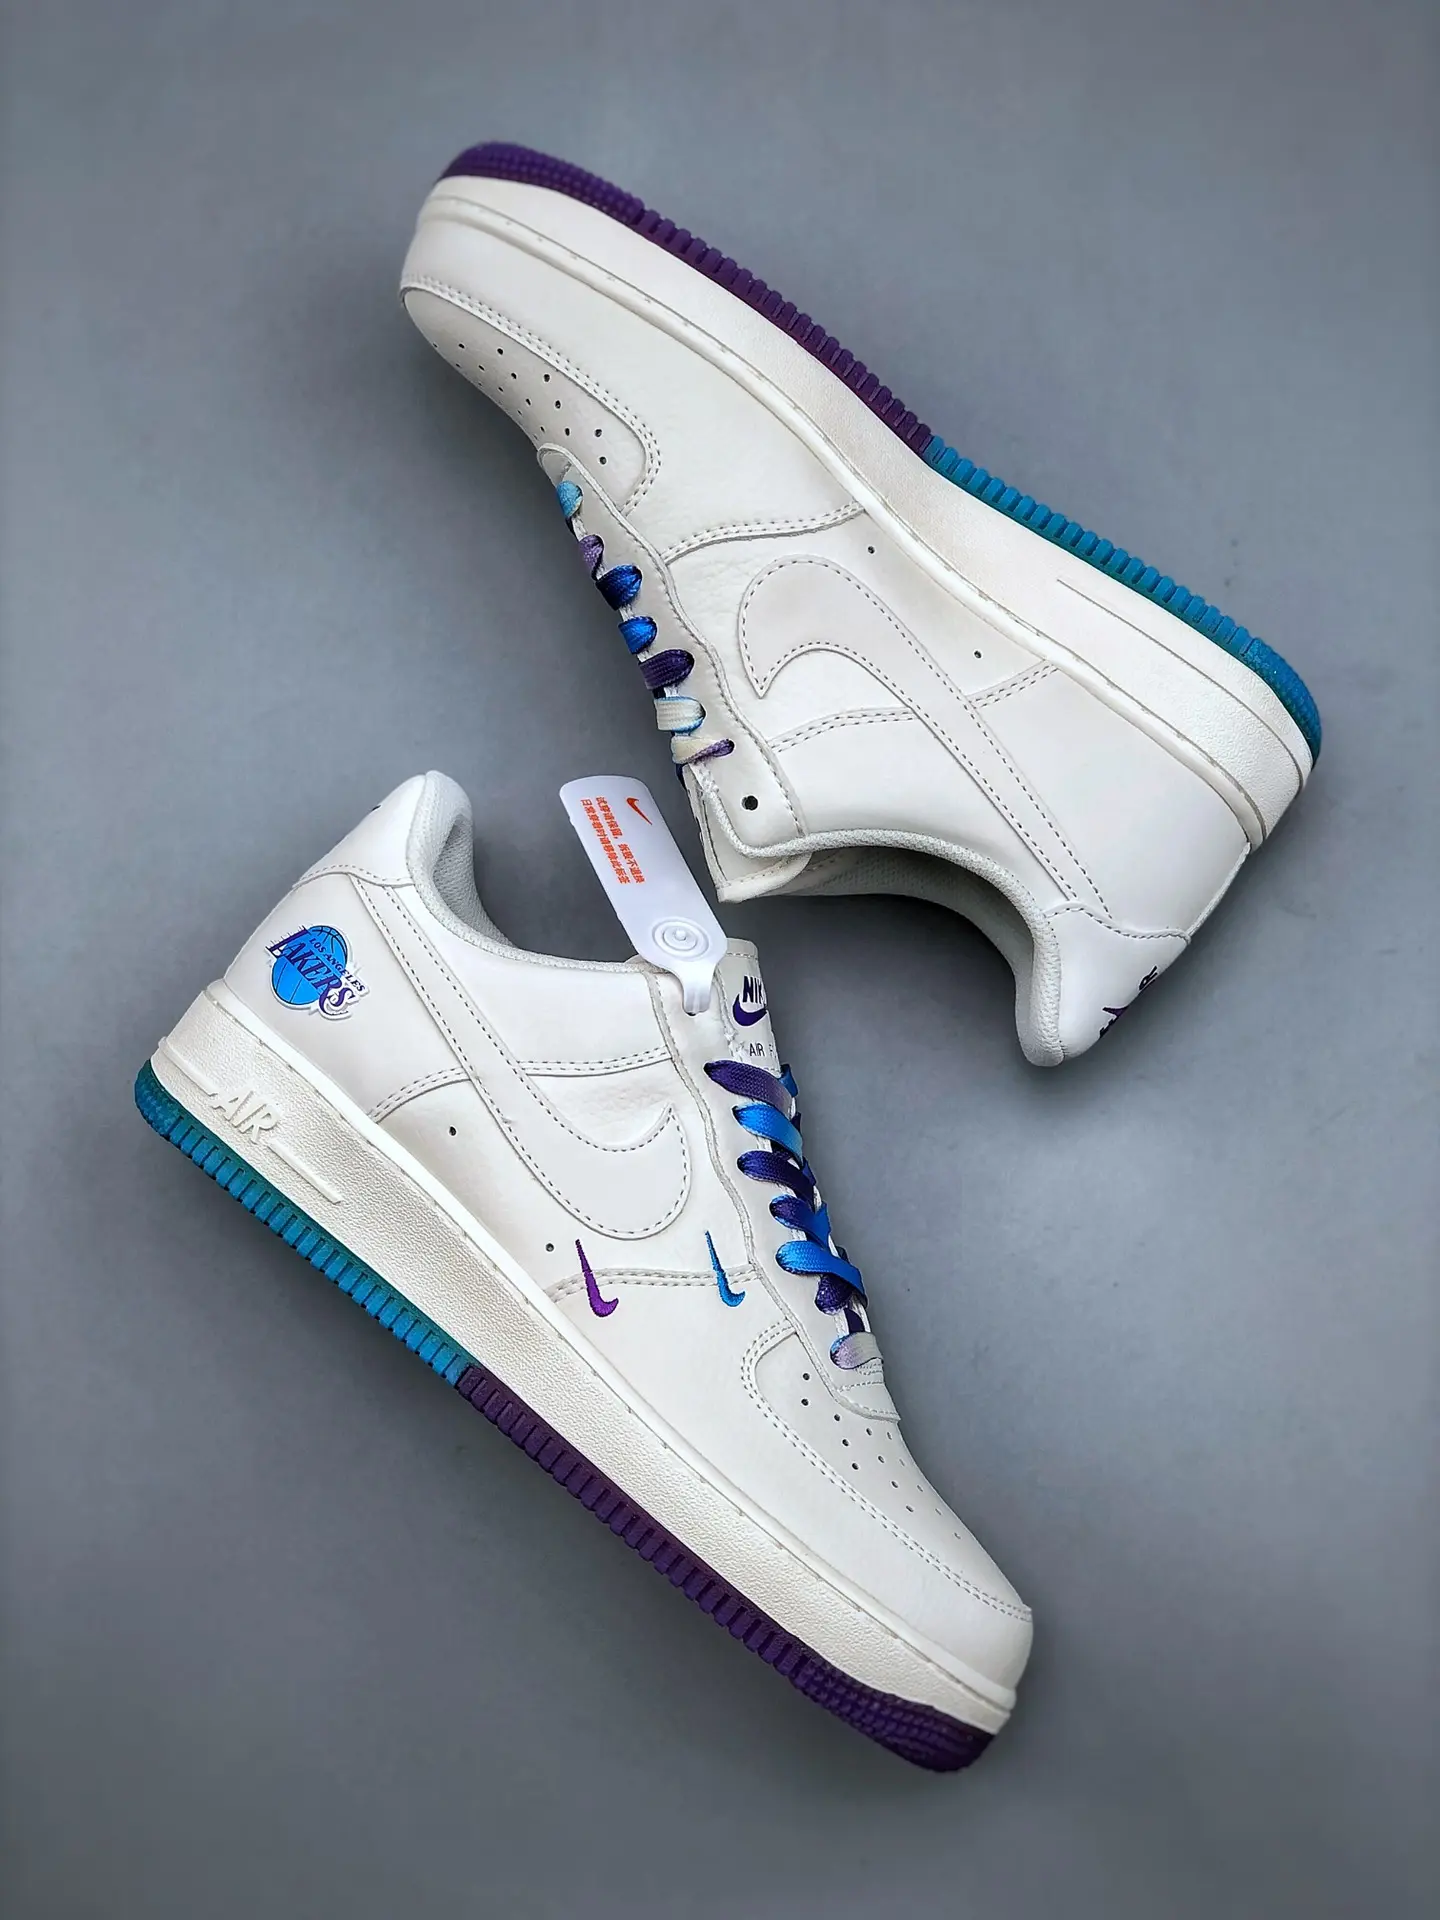 YASSW | Nike Air Force 1 '07 Laser Blue Purple Men's Shoes Review